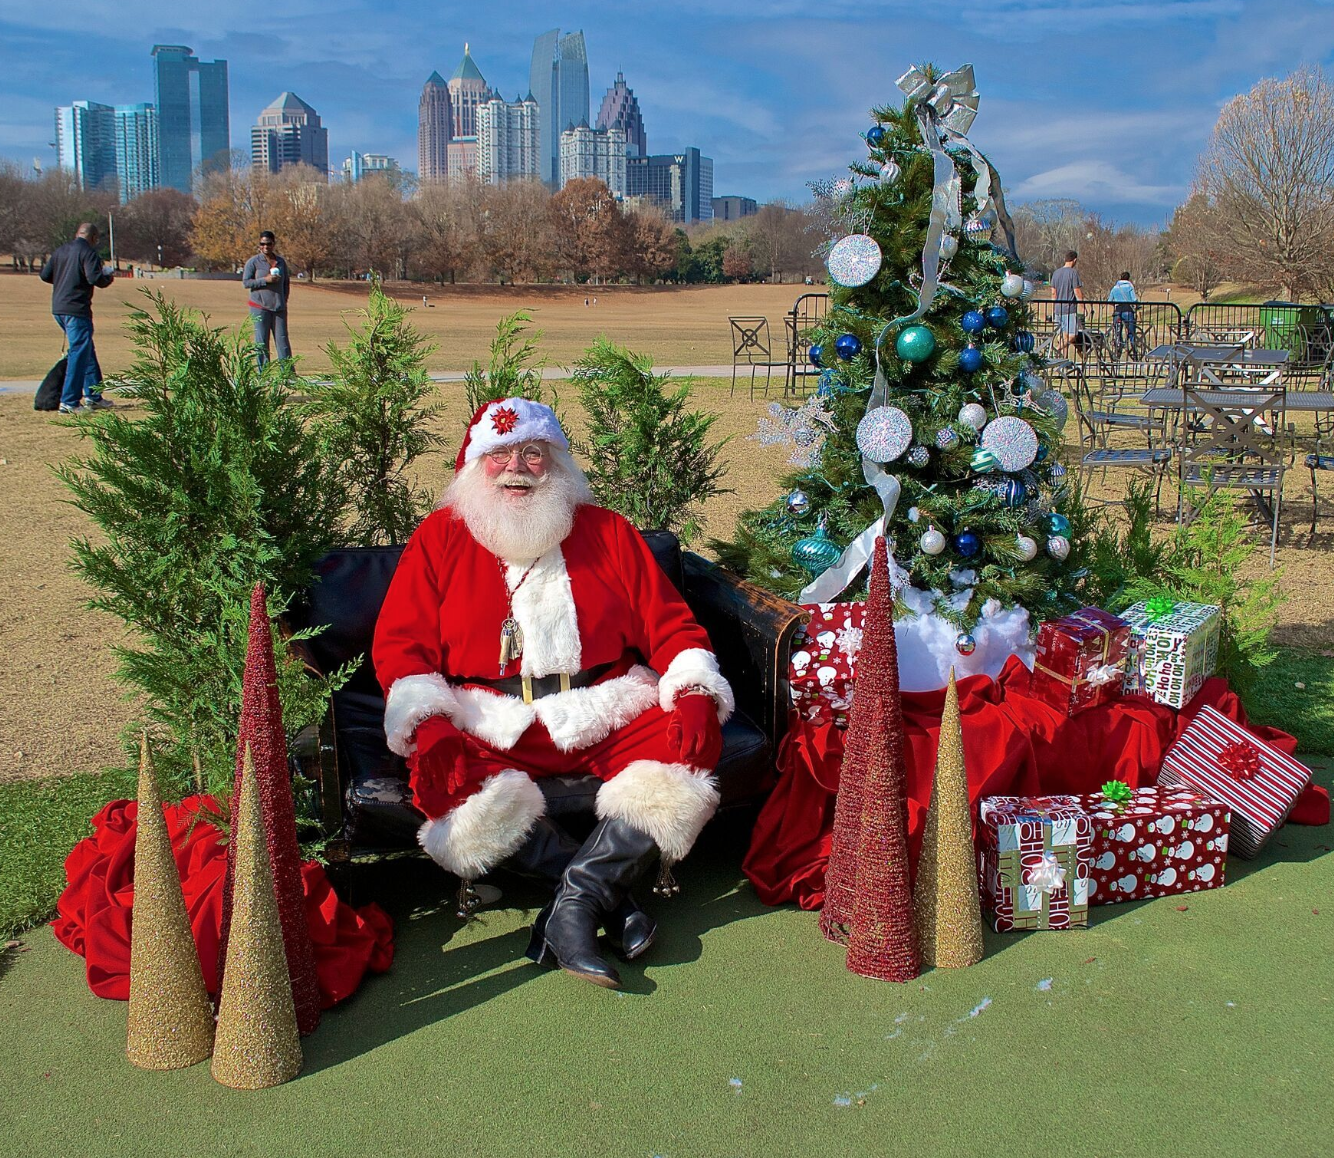 Santa Claus Returns to Park Tavern in Piedmont Park This December